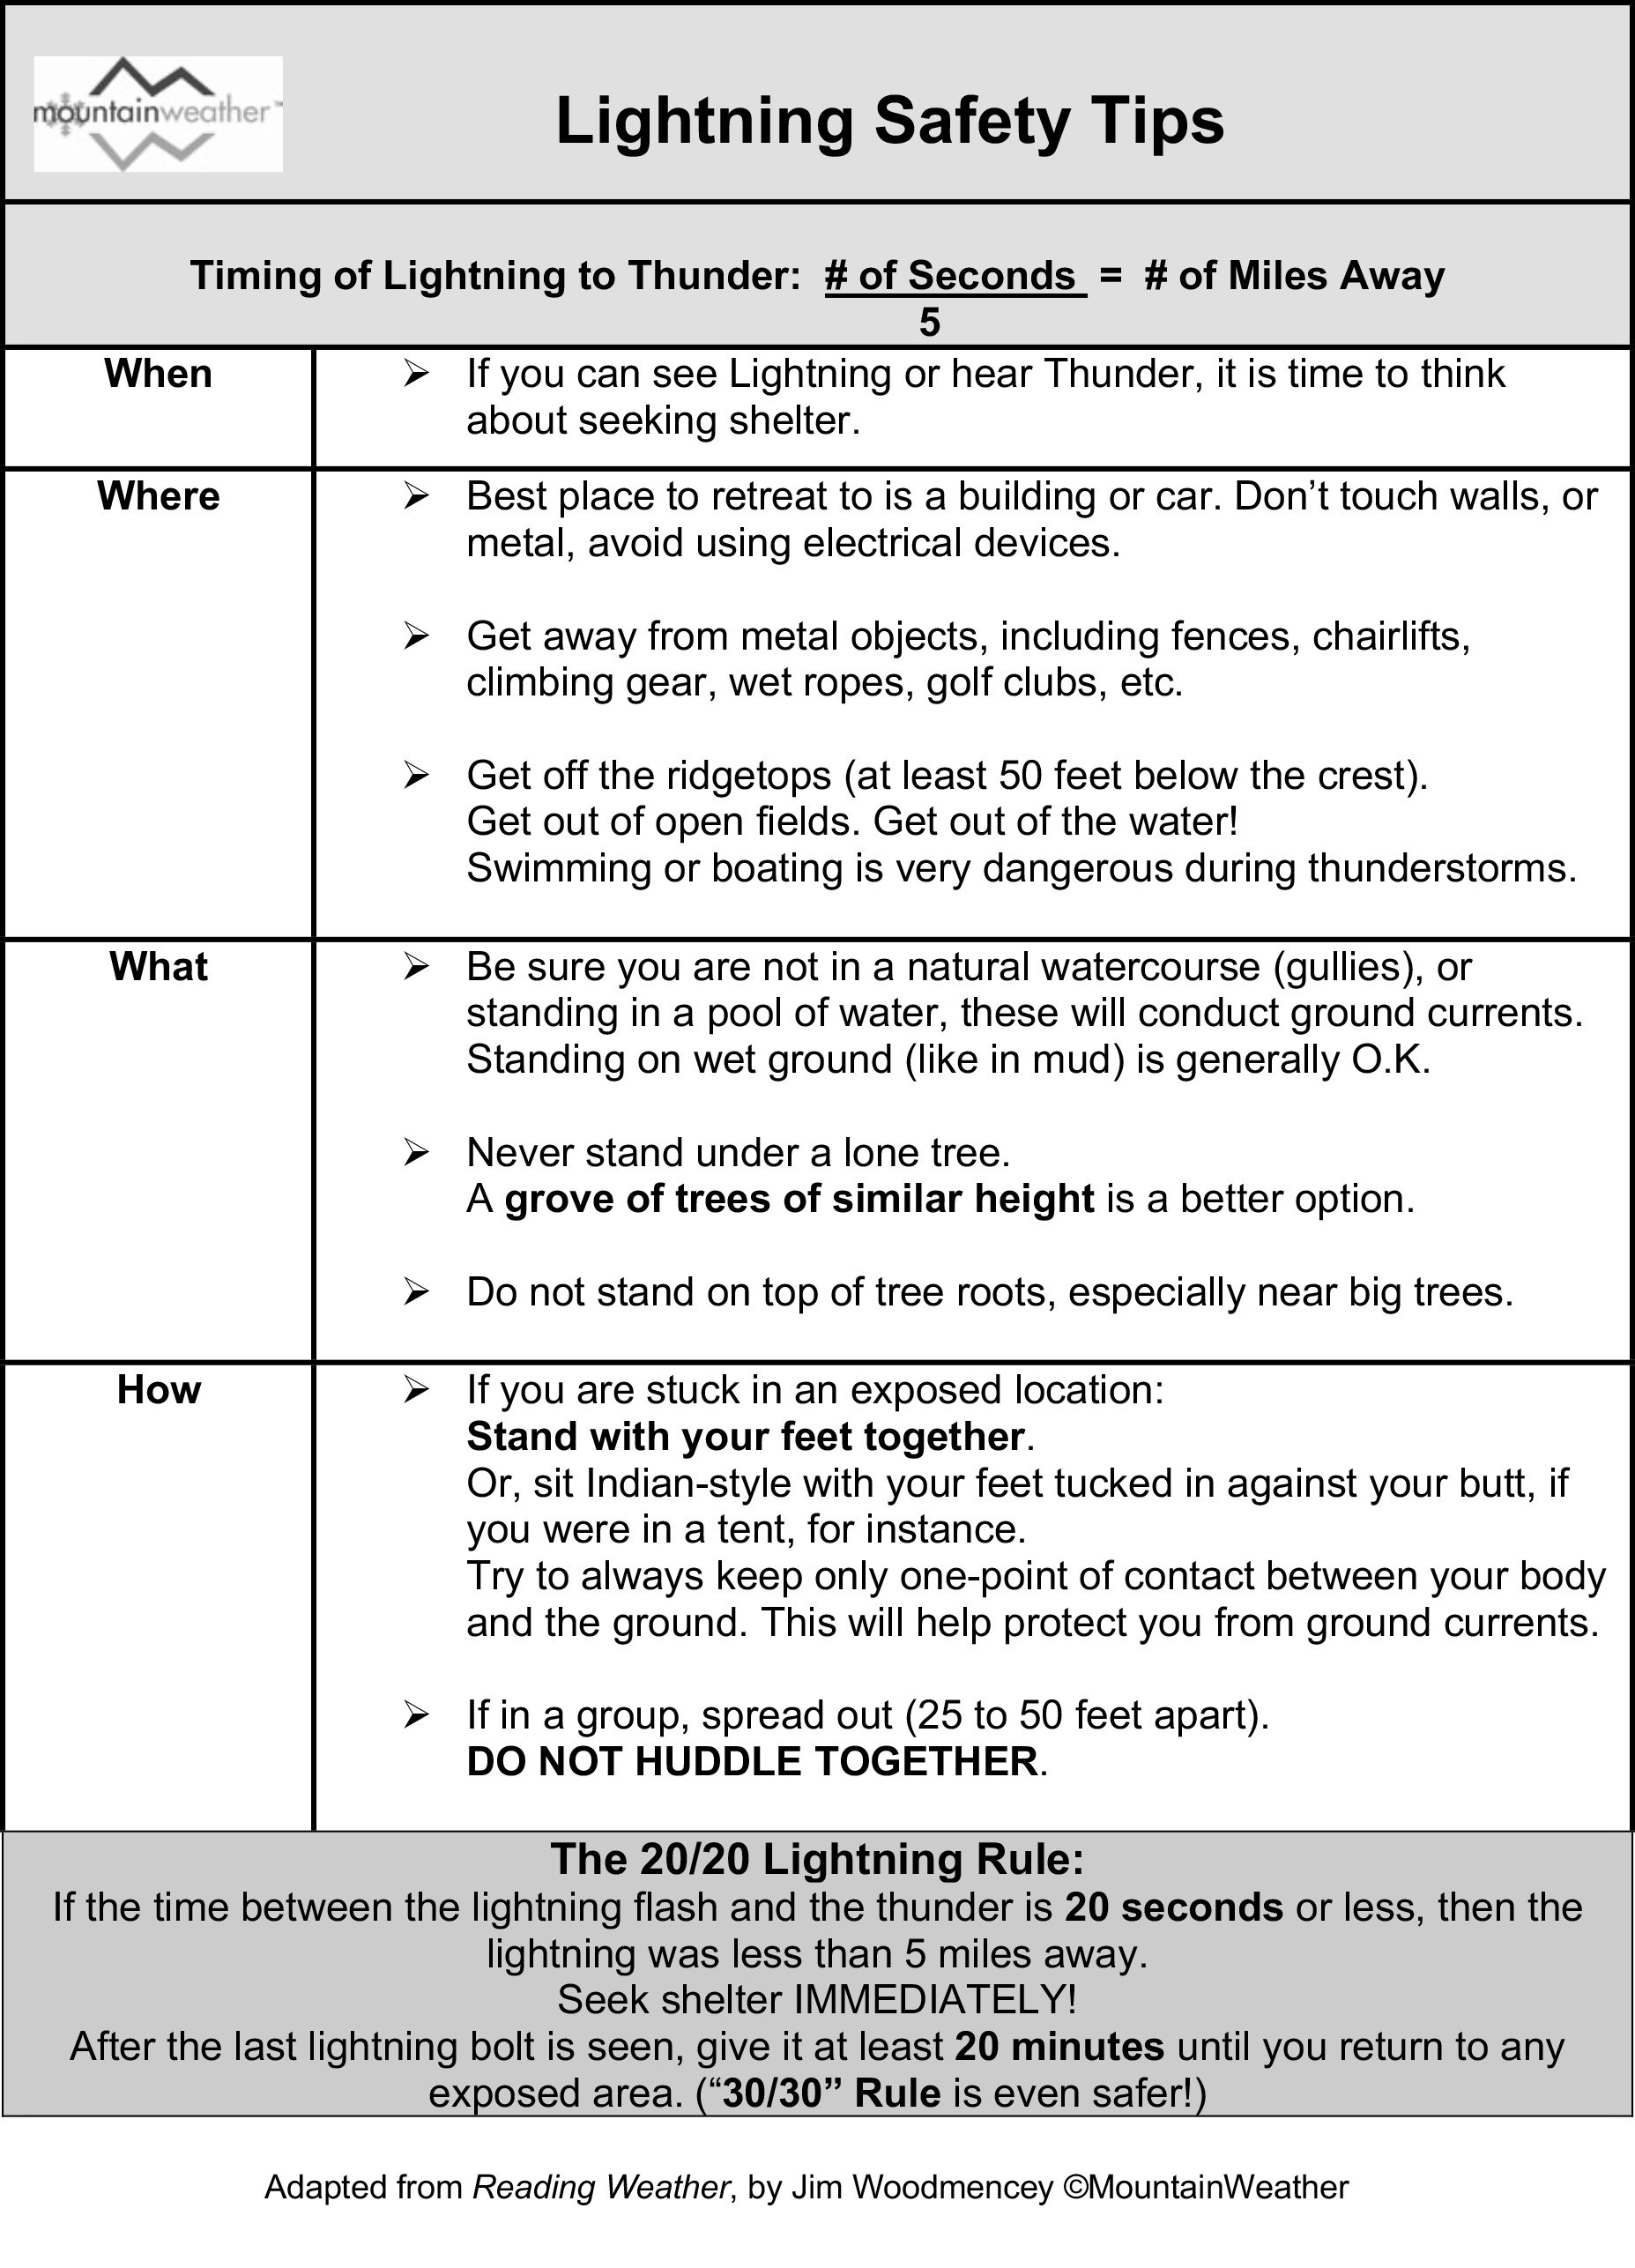 Lightning safety precautions